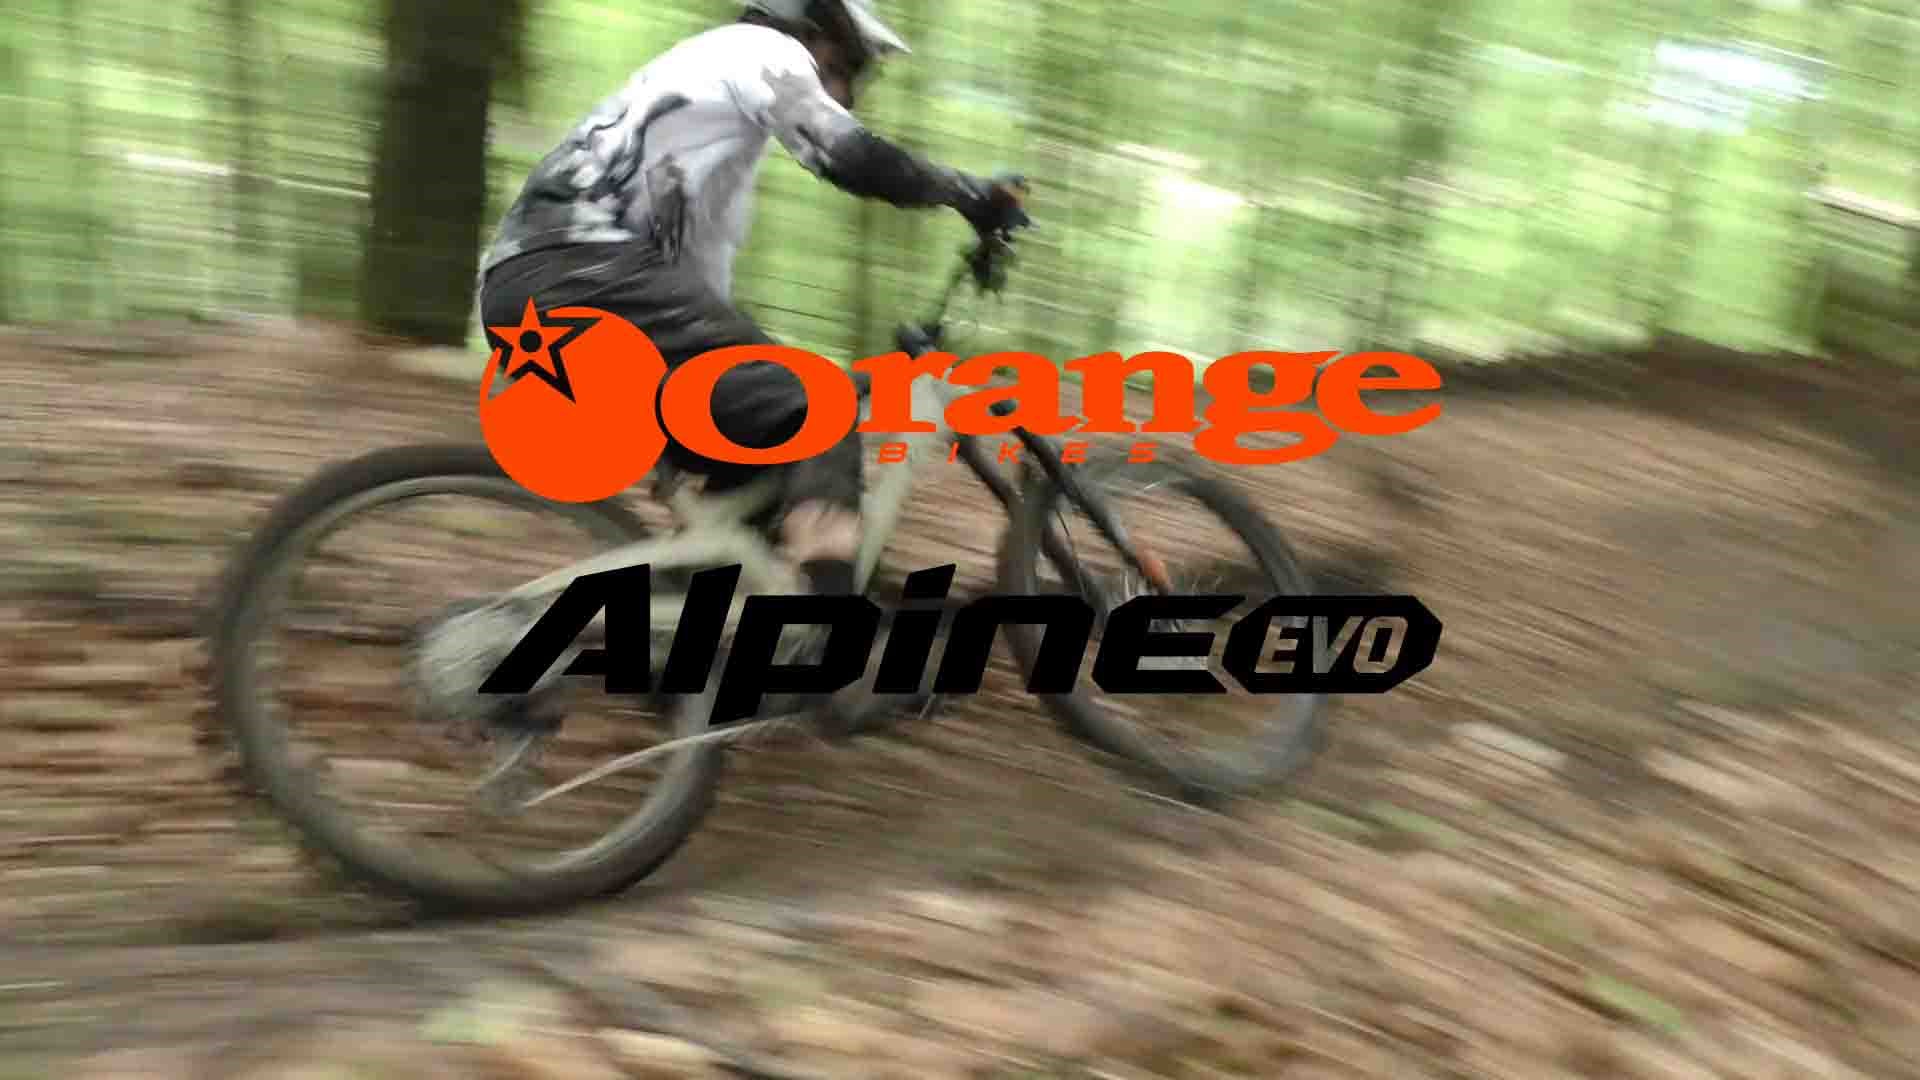 Joe Barnes on the new Alpine EVO features